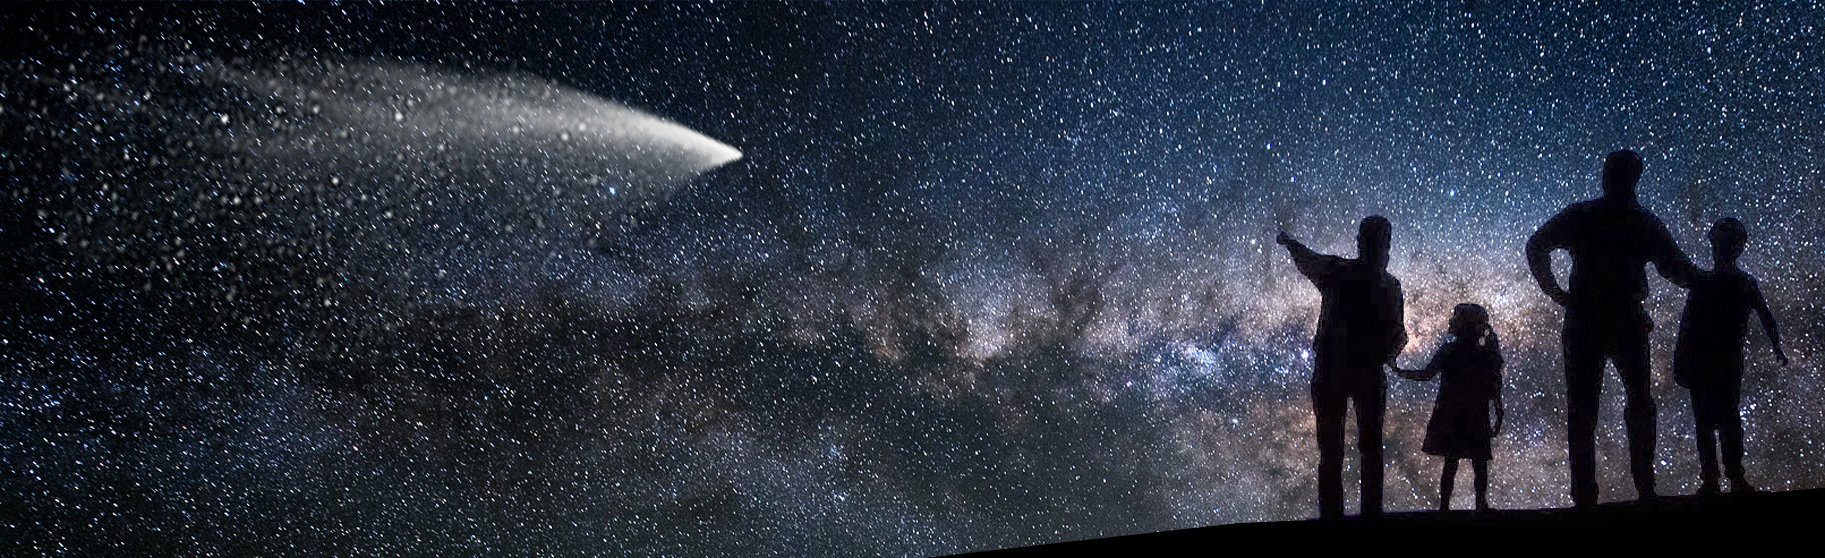 Landing on a Comet – 27th April 2006